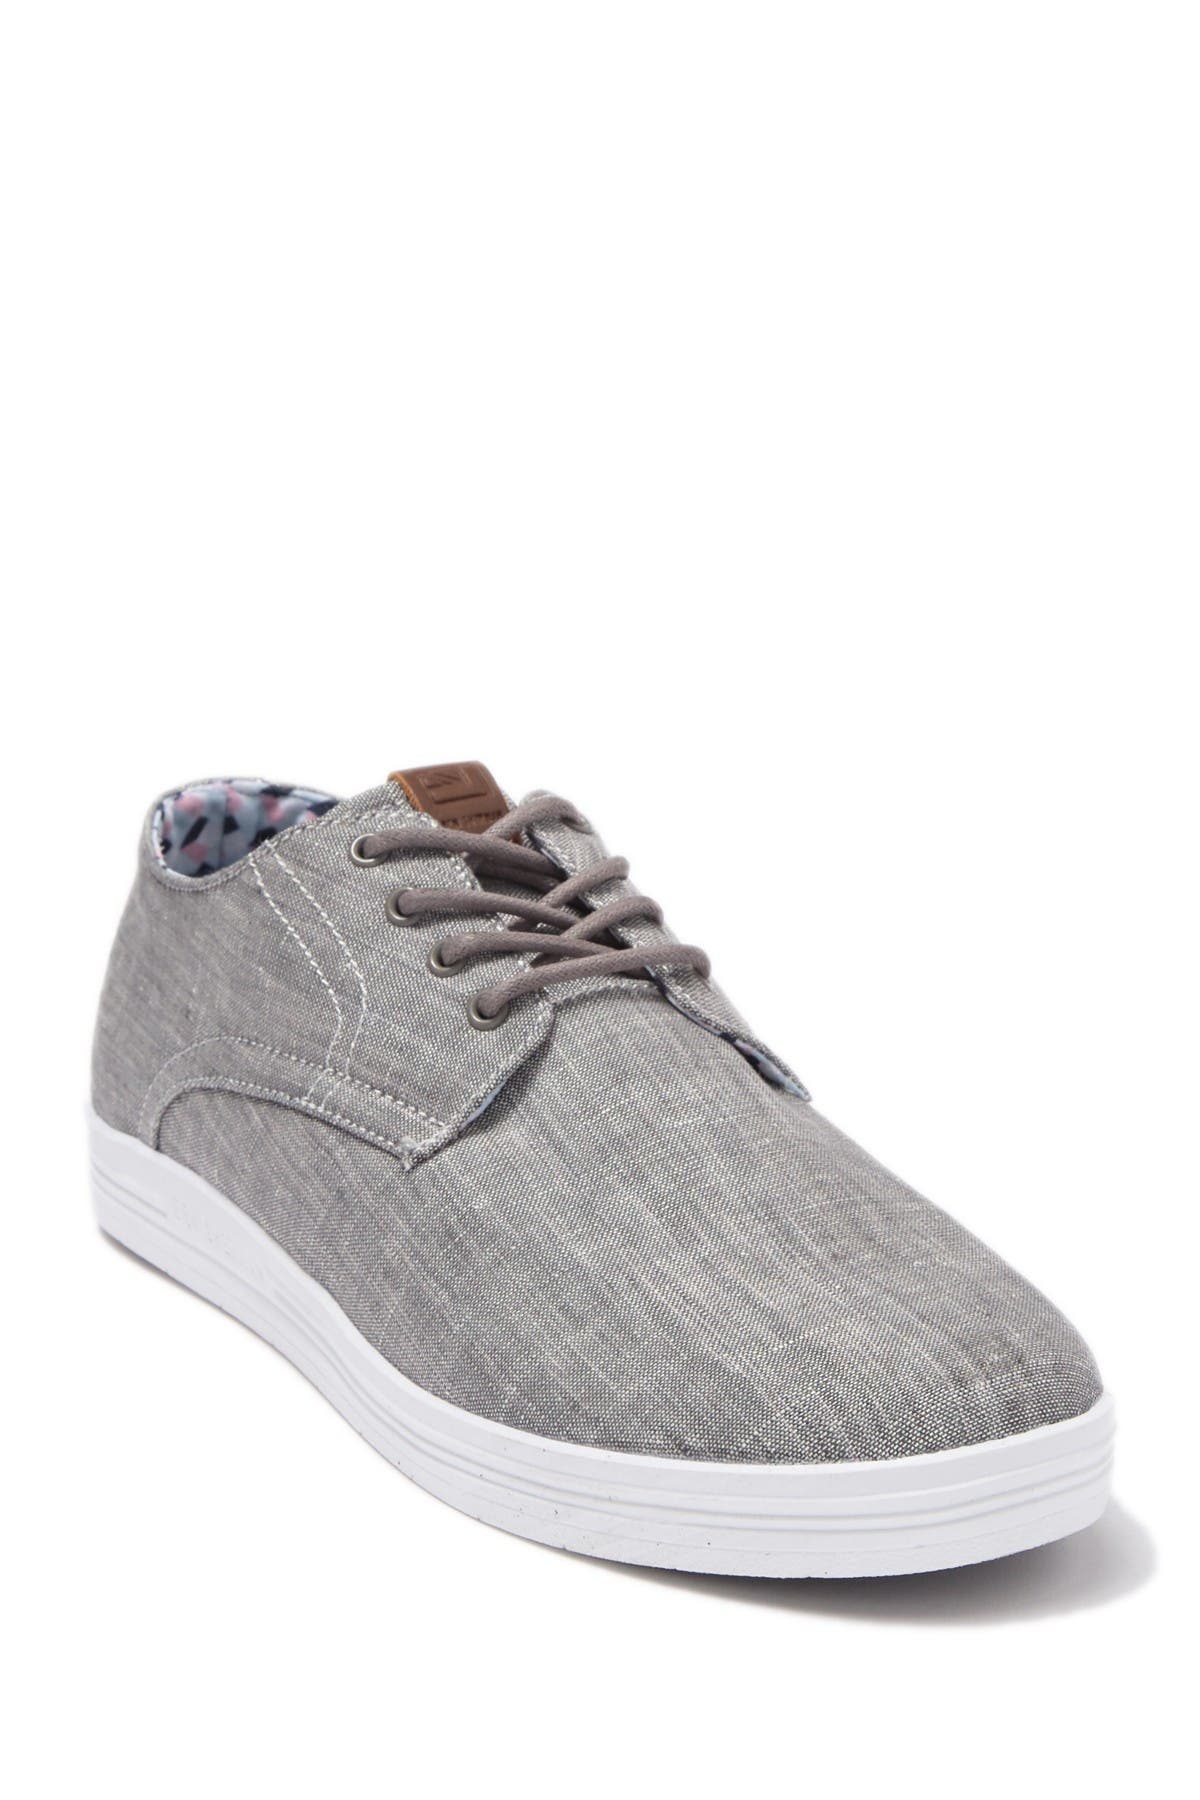 Ben Sherman Preston Lace-up Sneaker In Medium Grey6